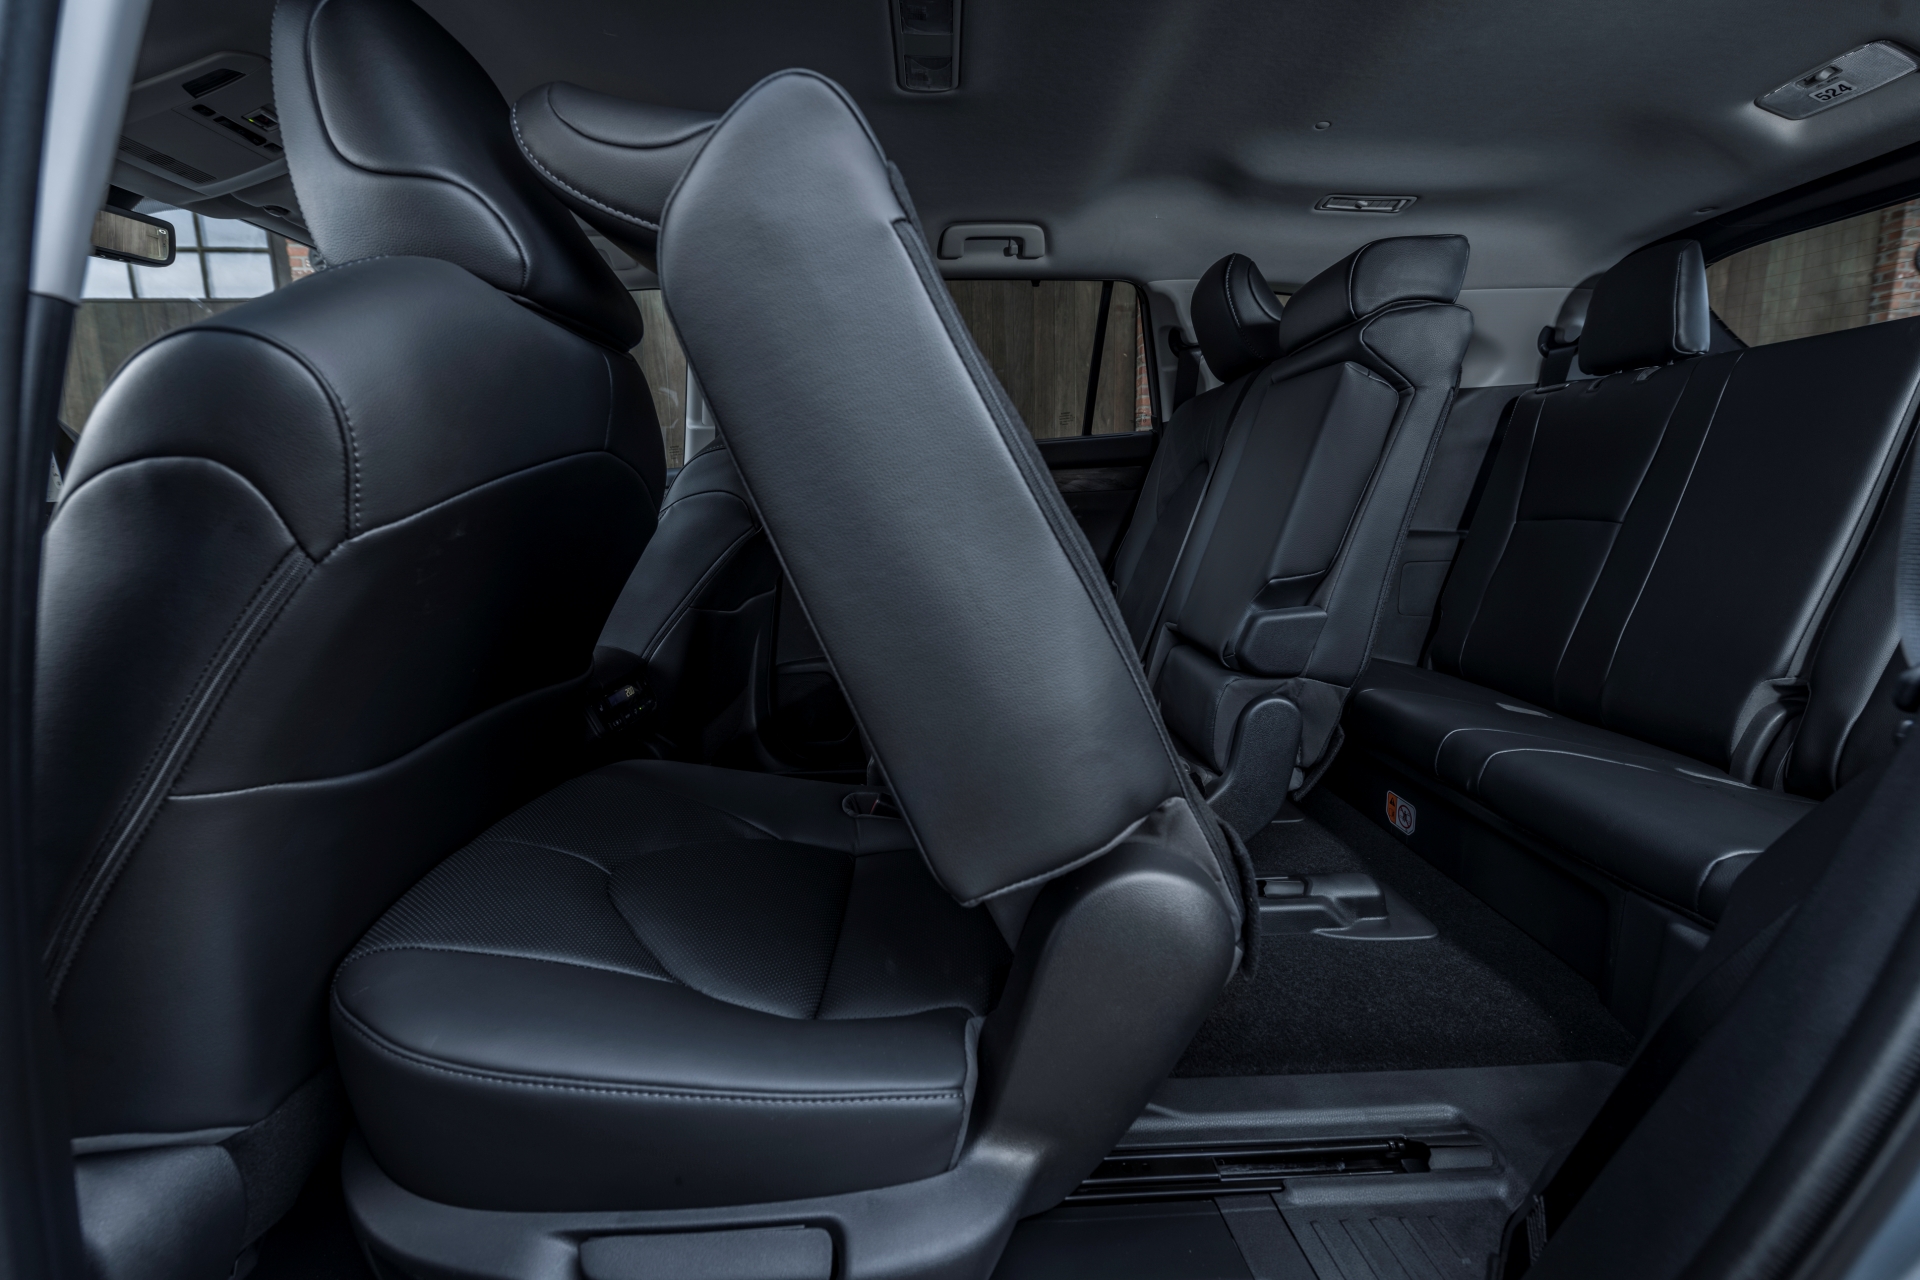 Toyota Highlander Electric Hybrid 2021 - Interior (6)